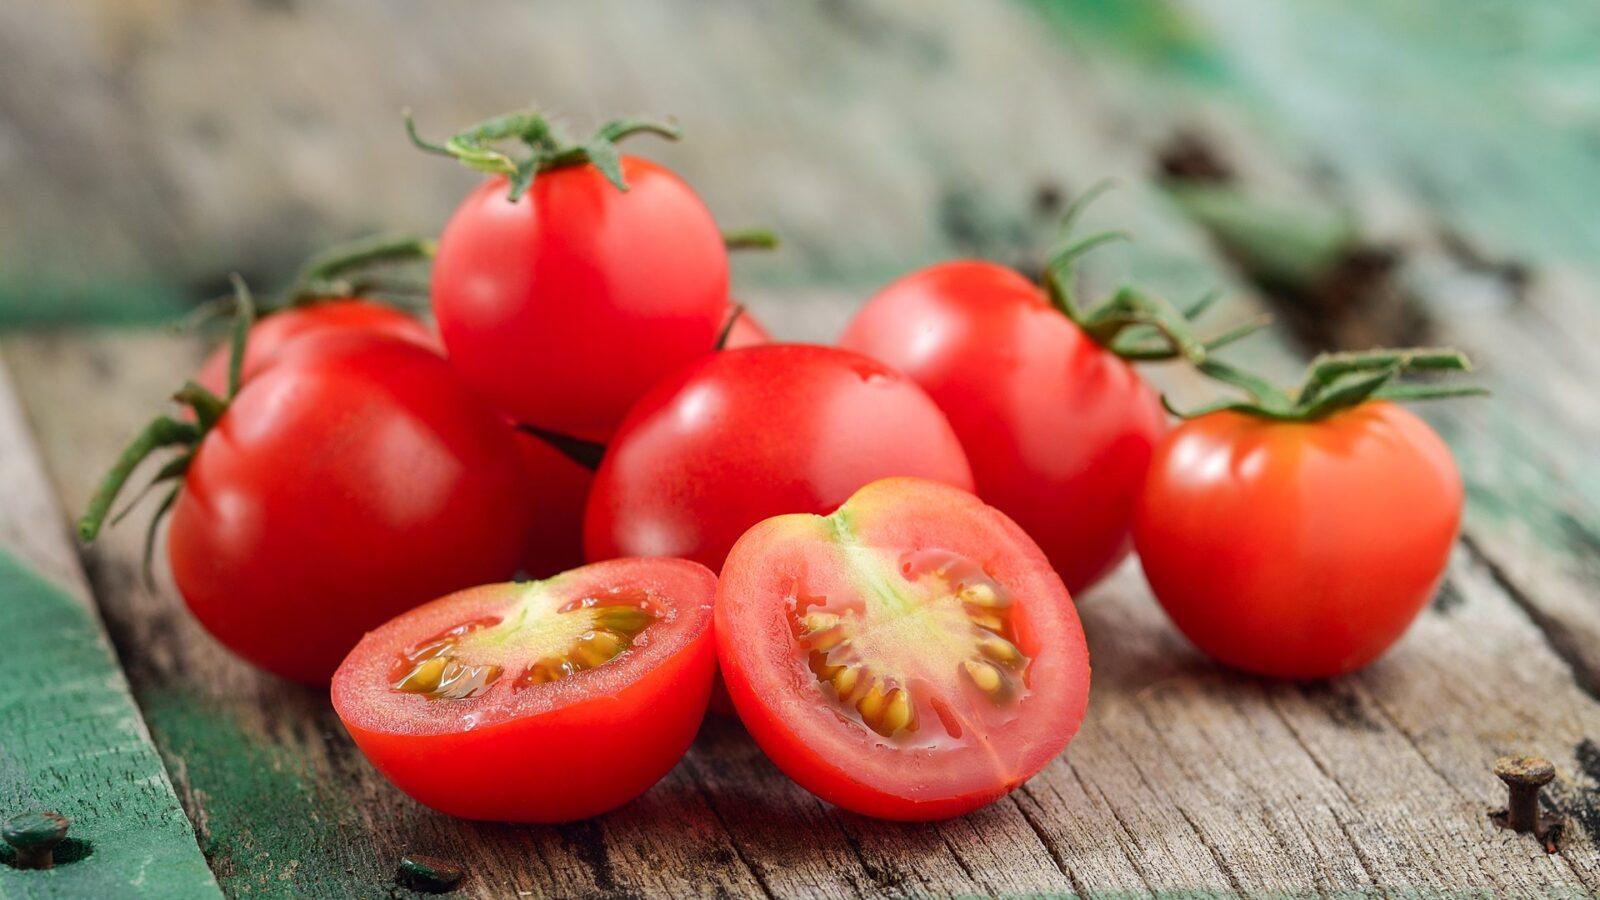 ile kalorii maja pomidorki cherry